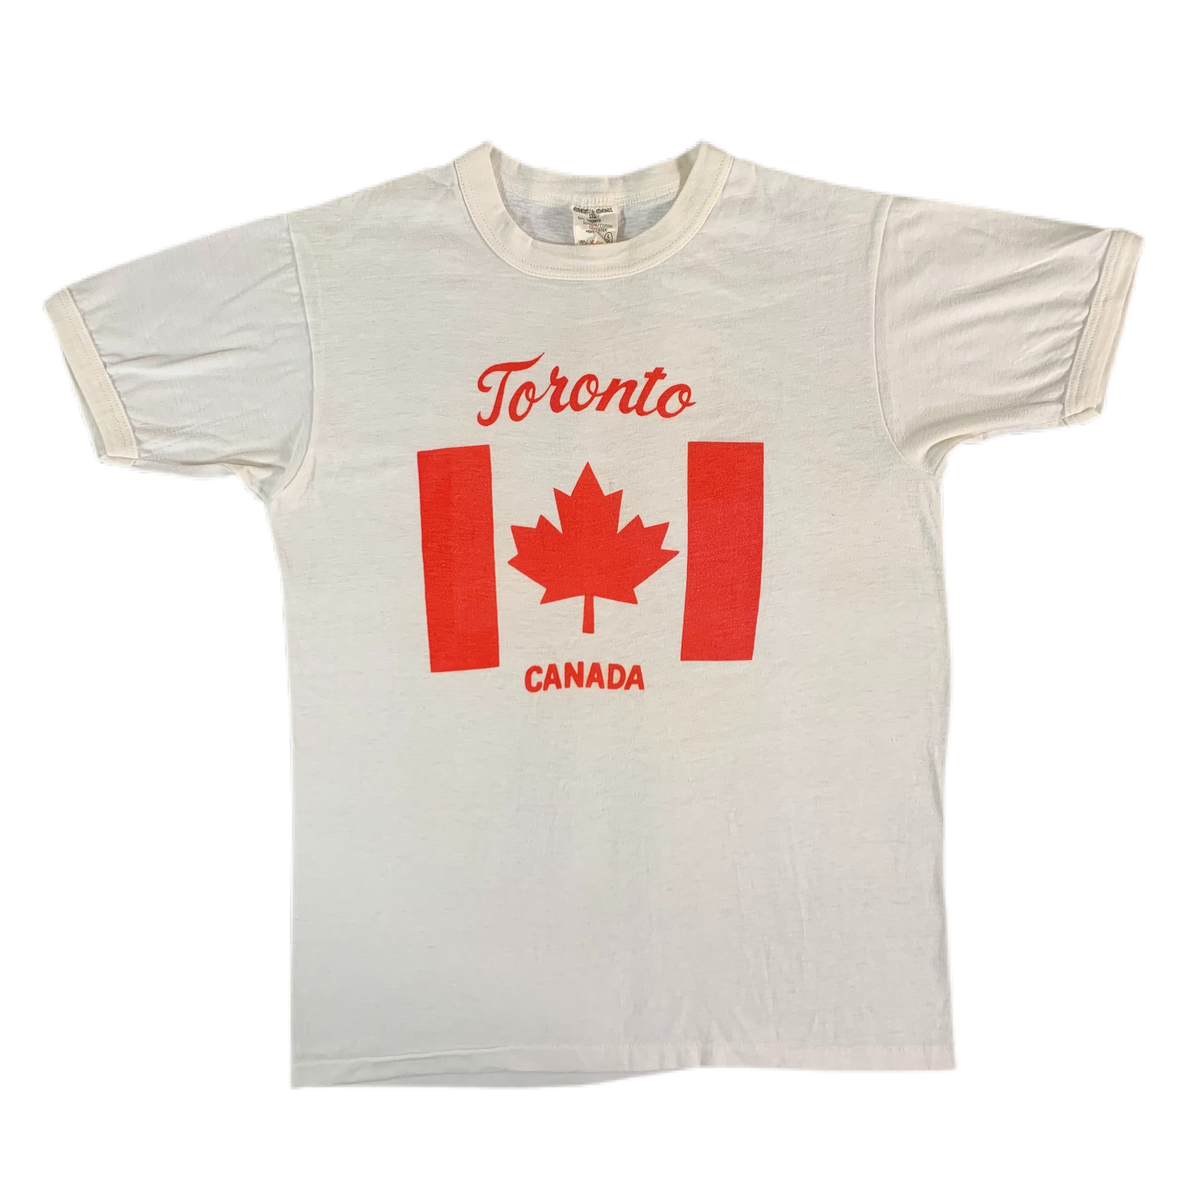 Vintage Canada “Toronto” T-Shirt